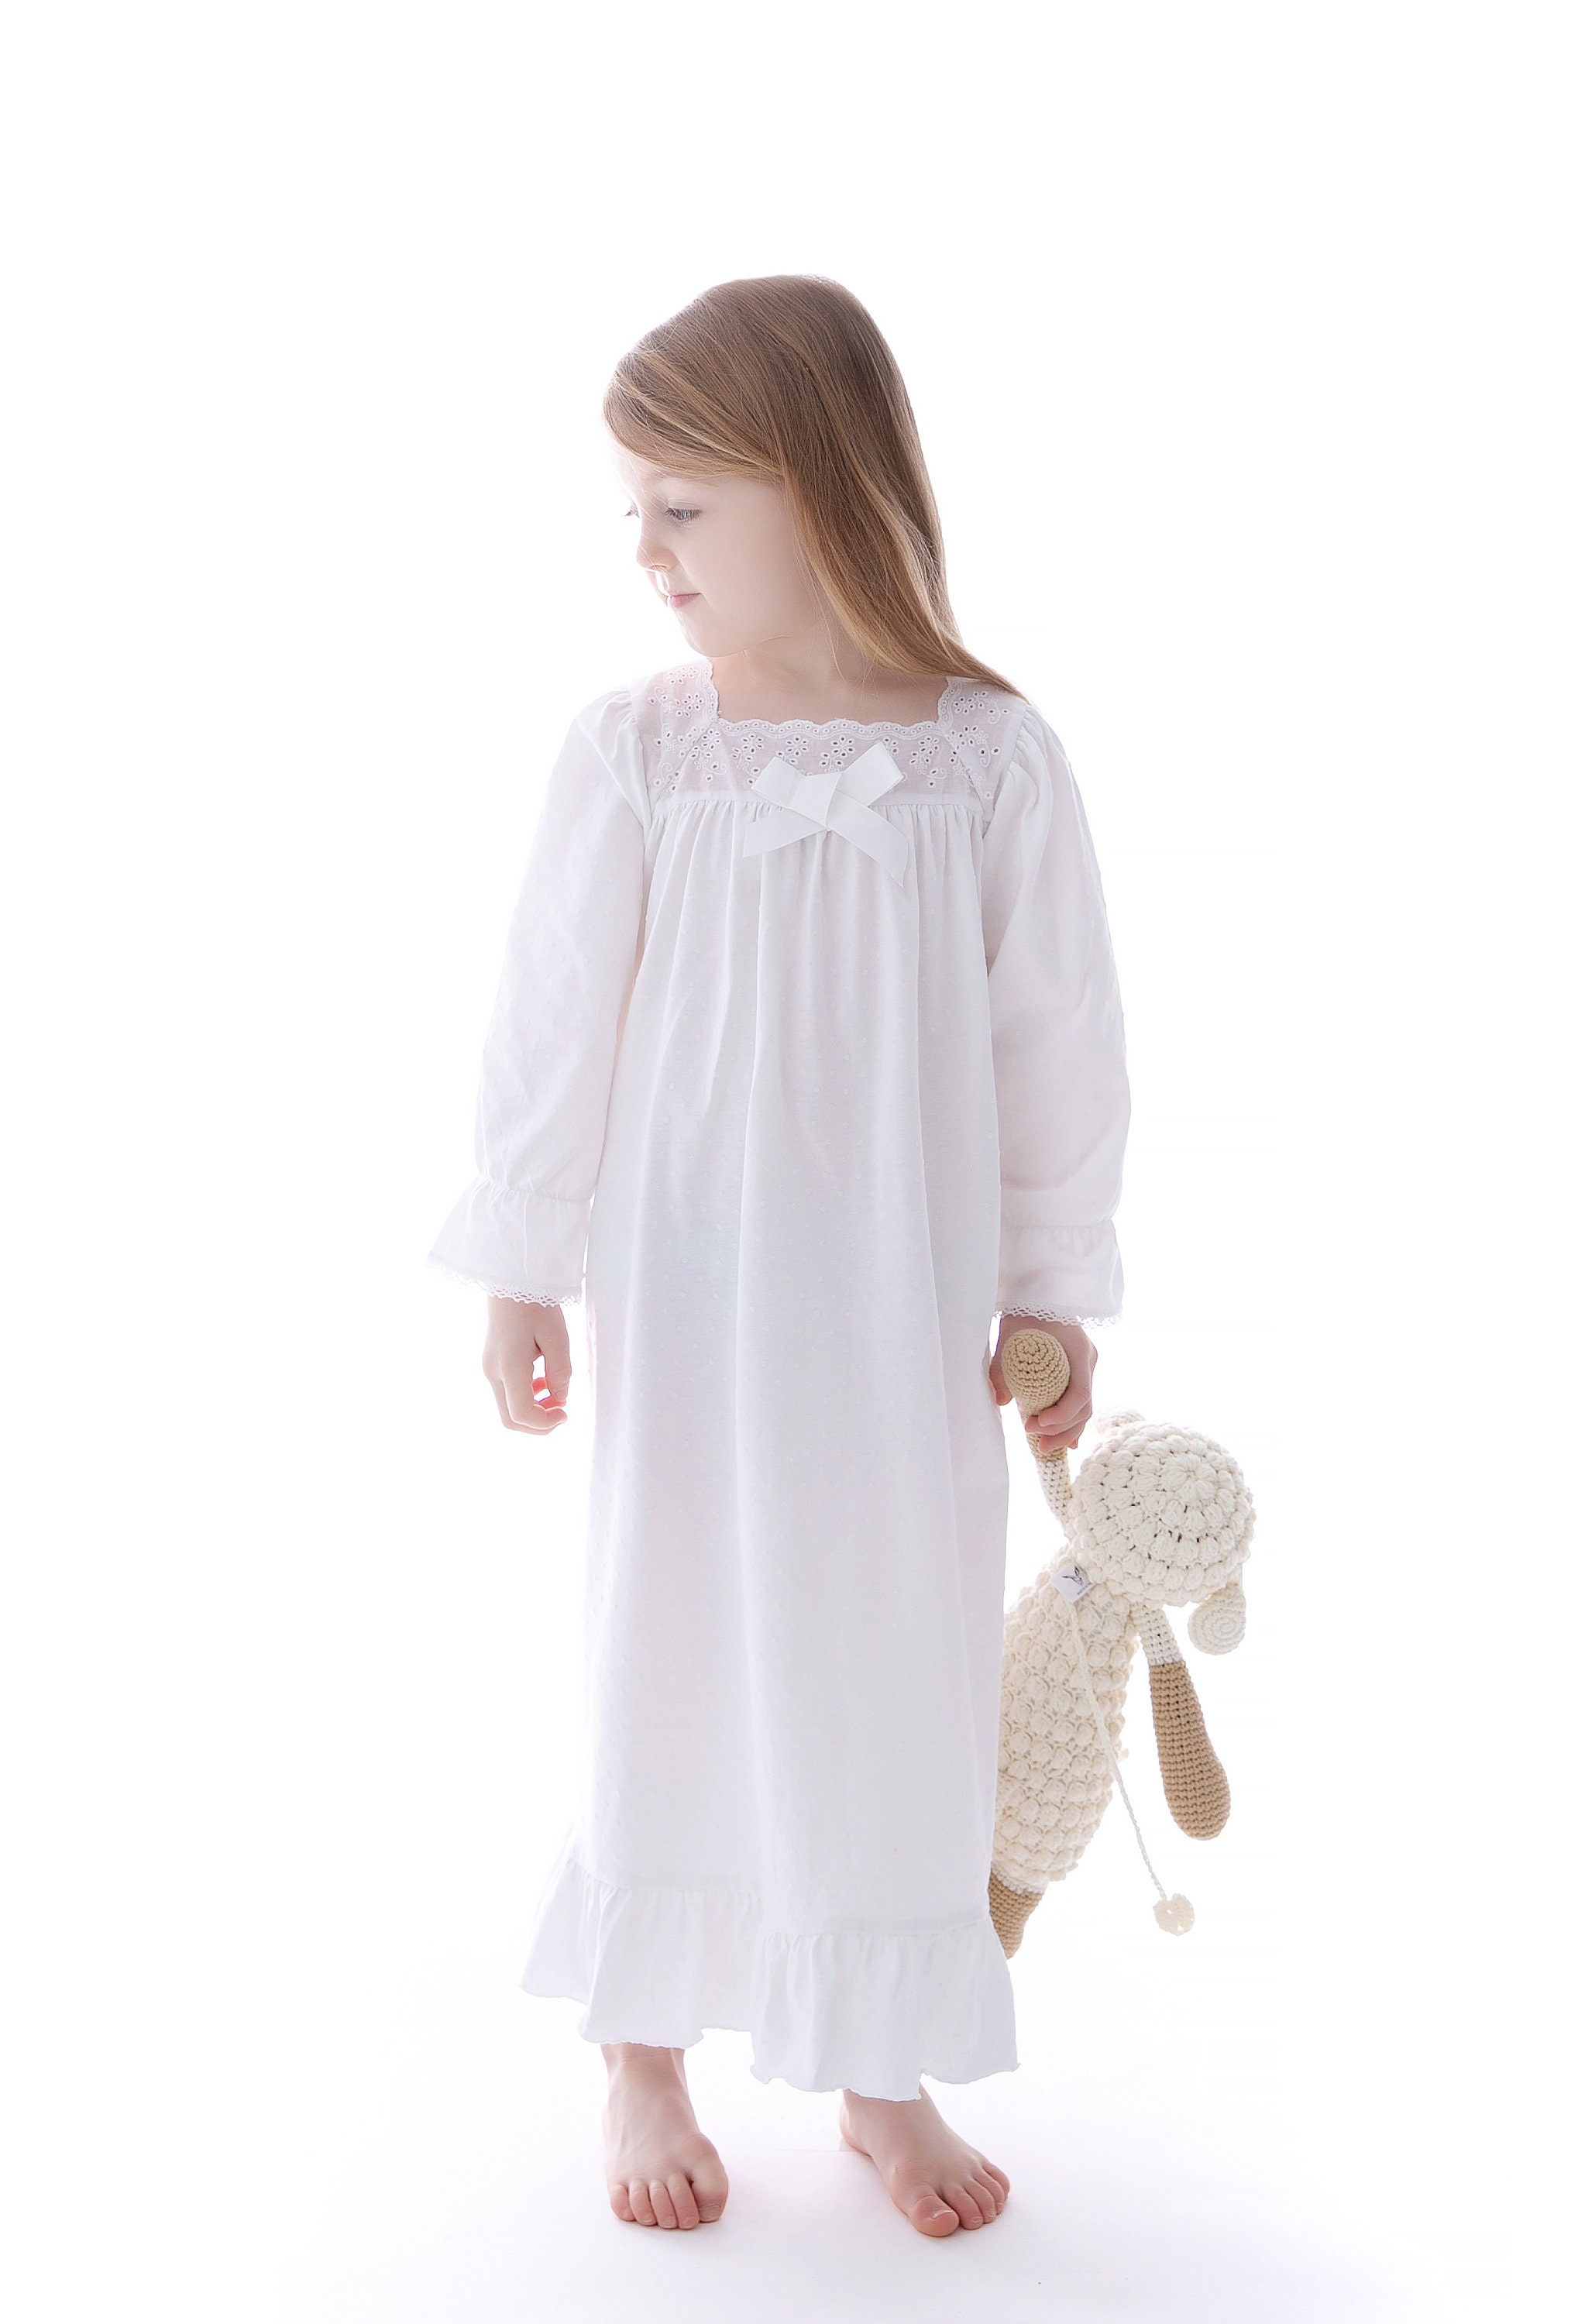 Girls Nightgown Toddler Sleep Dress Princess Nightwear for | Etsy